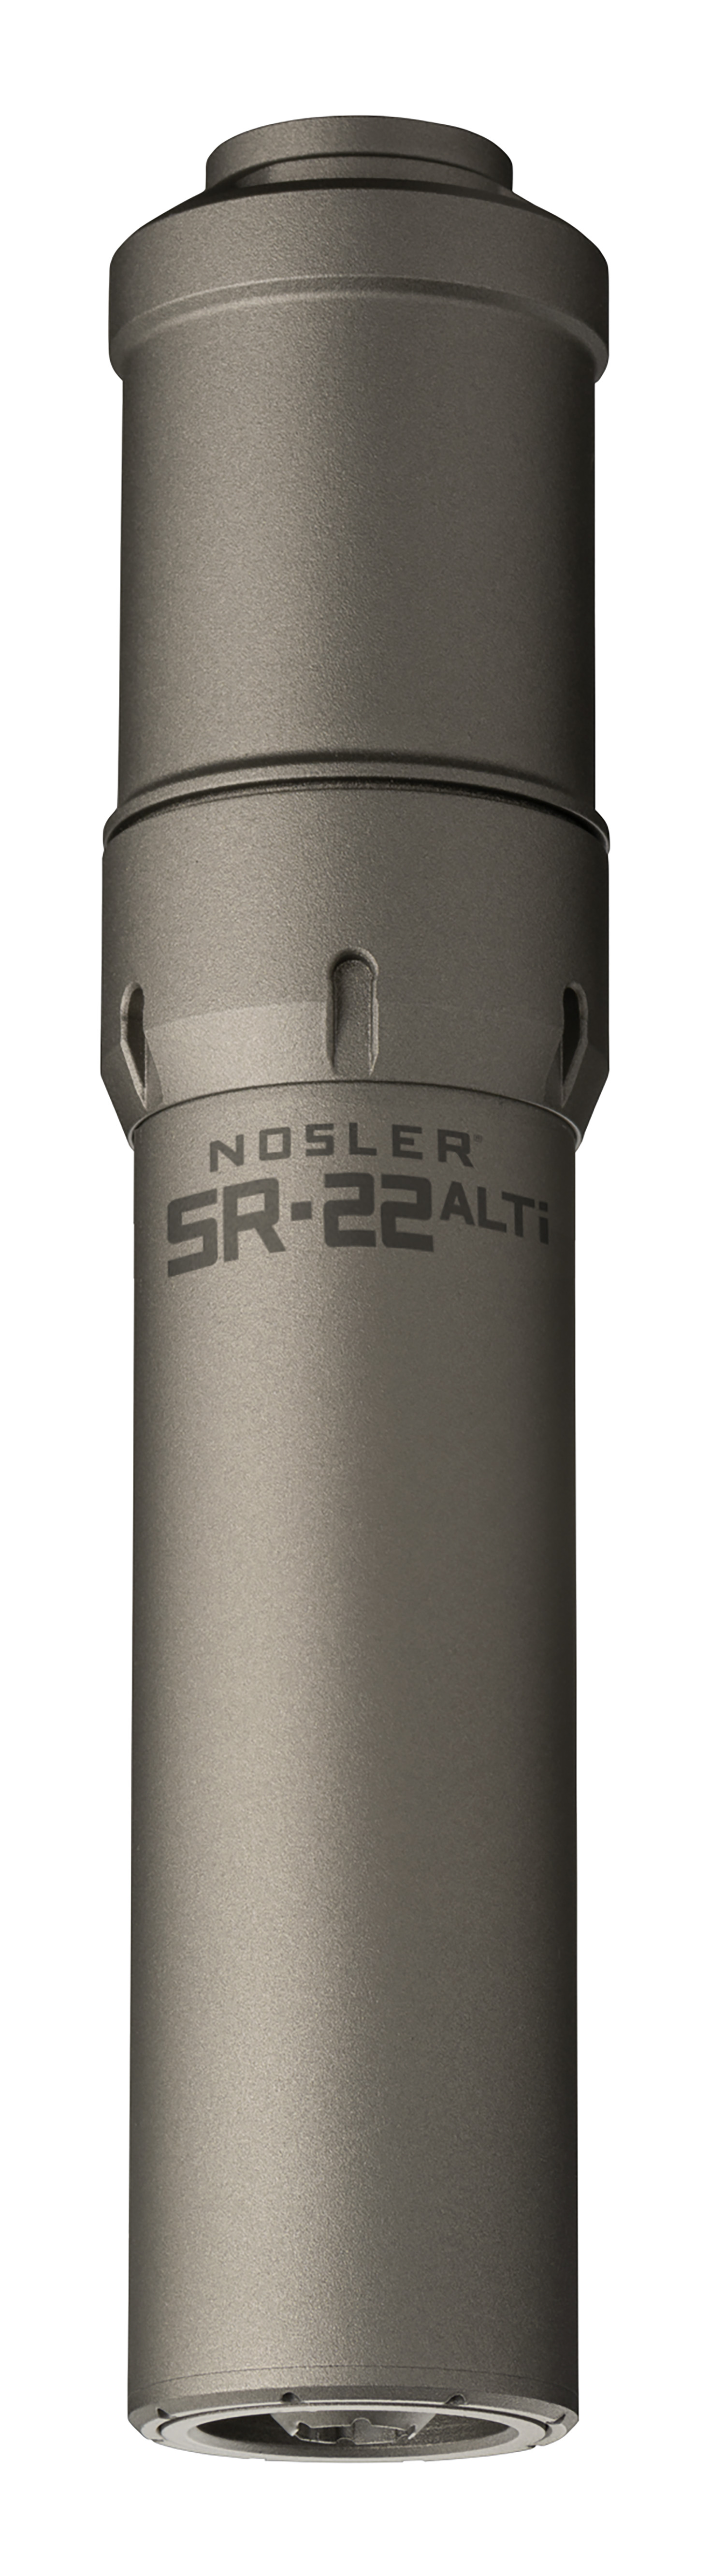 Nosler 90602 SR-22ALTI  22 Cal 1.74